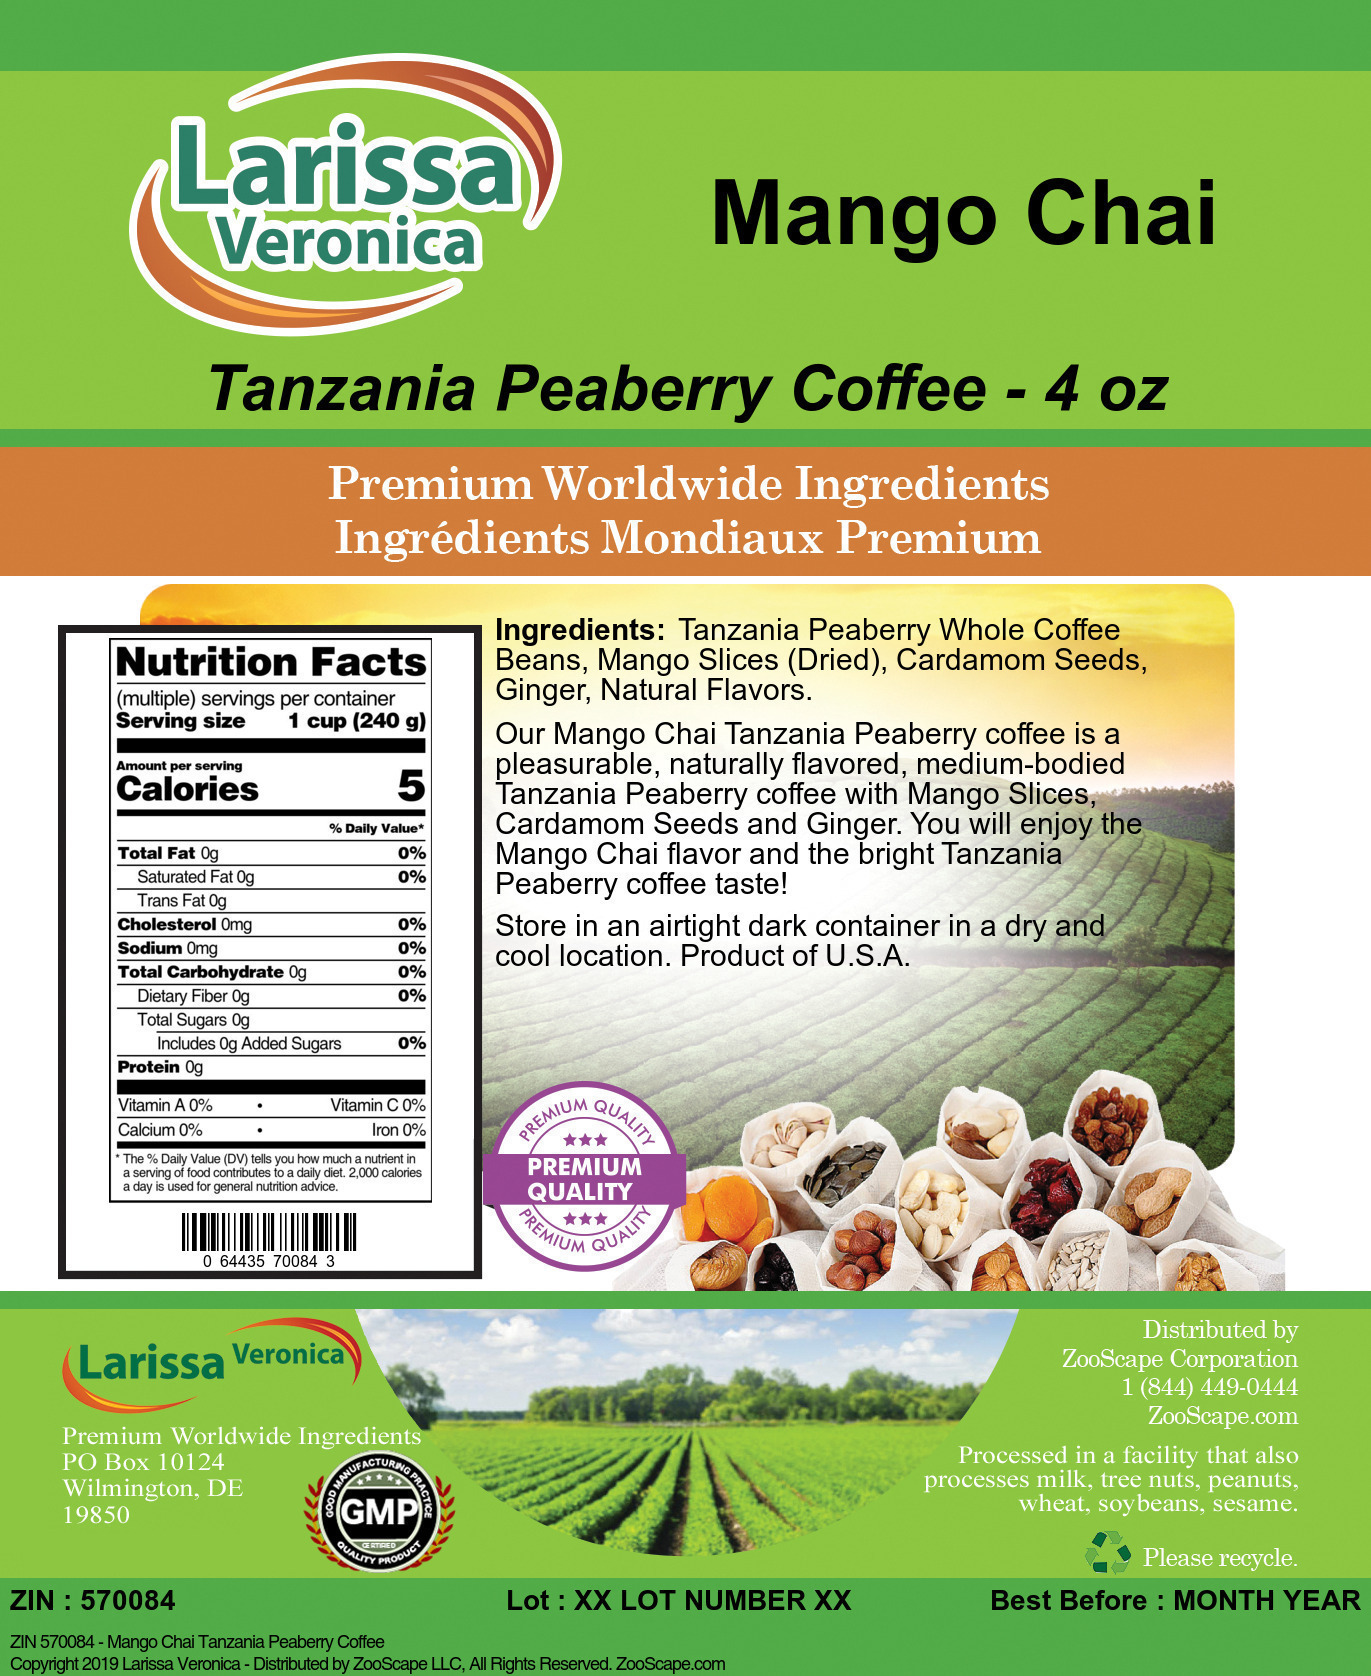 Mango Chai Tanzania Peaberry Coffee - Label